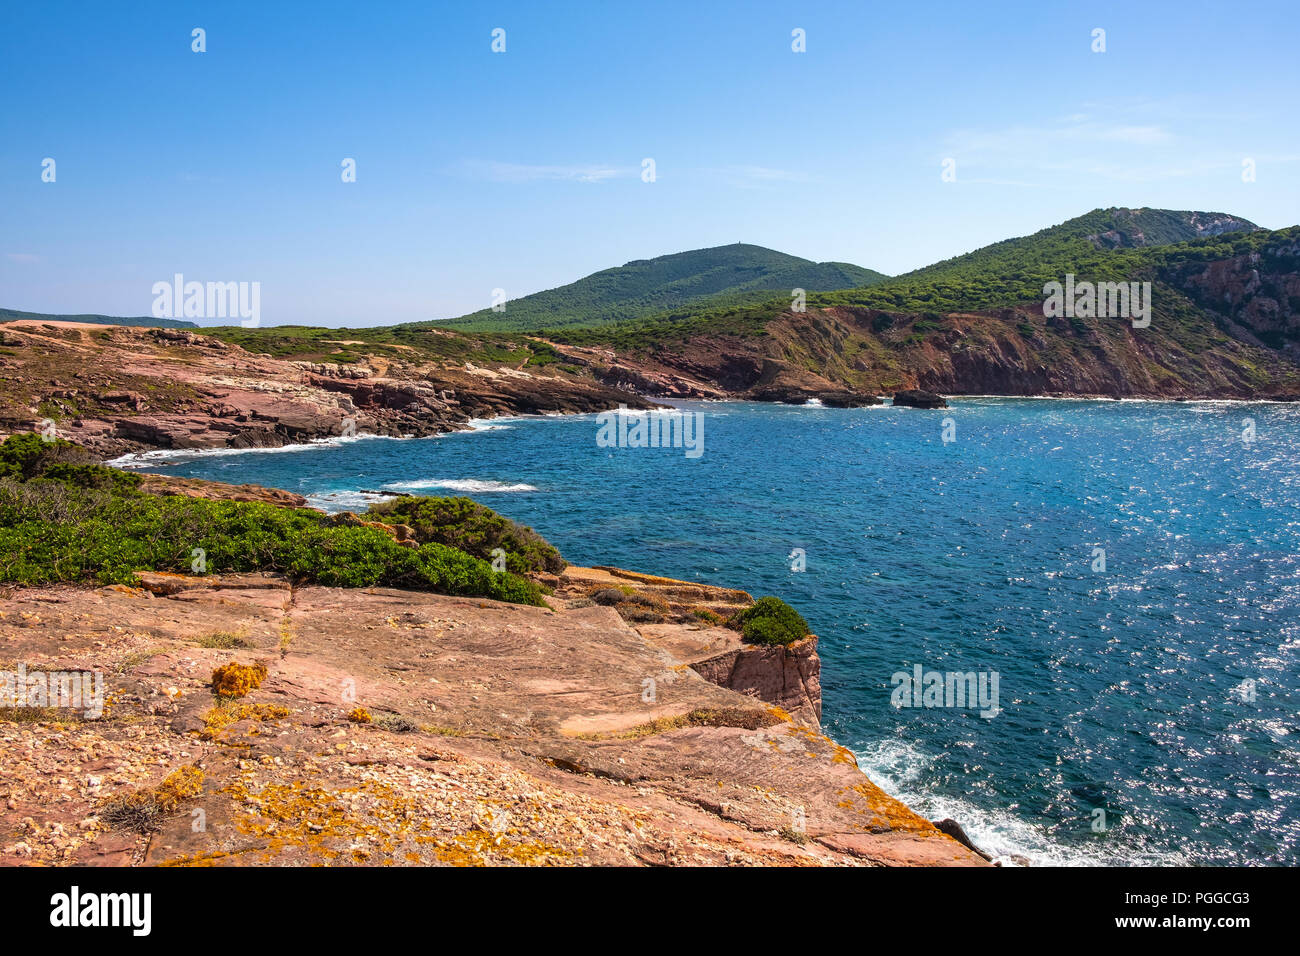 Alghero, Sardinia / Italy - 2018/08/11: Panoramic view of the Cala Porticciolo gulf with cliffs over the Cala Viola gulf in the Porto Conte Regional P Stock Photo